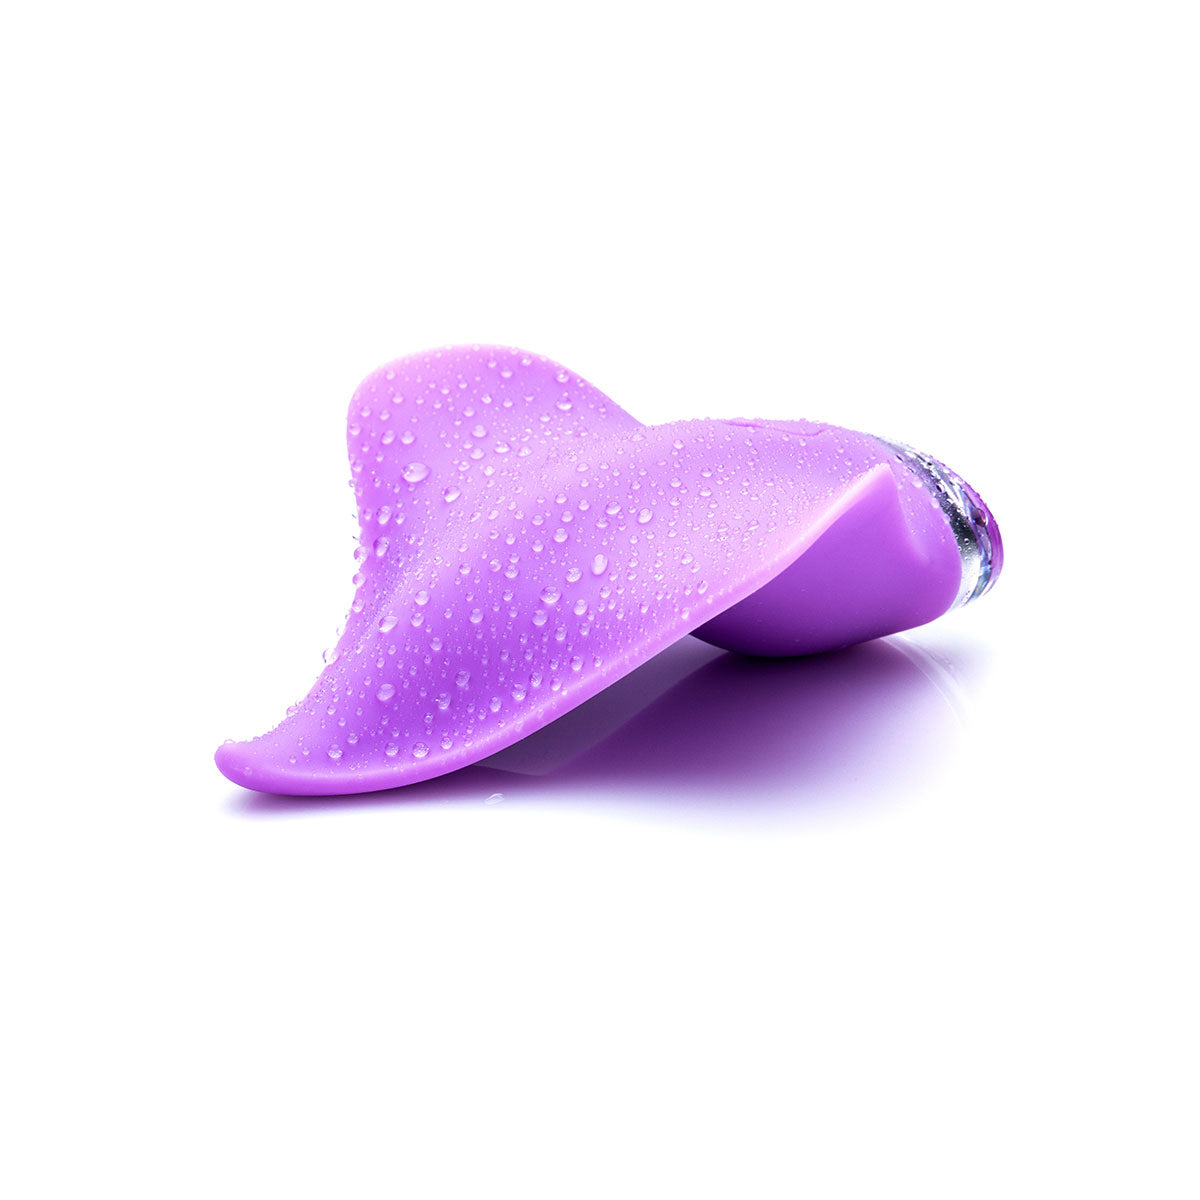 Clandestine Devices Mimic Vibrator Lilac